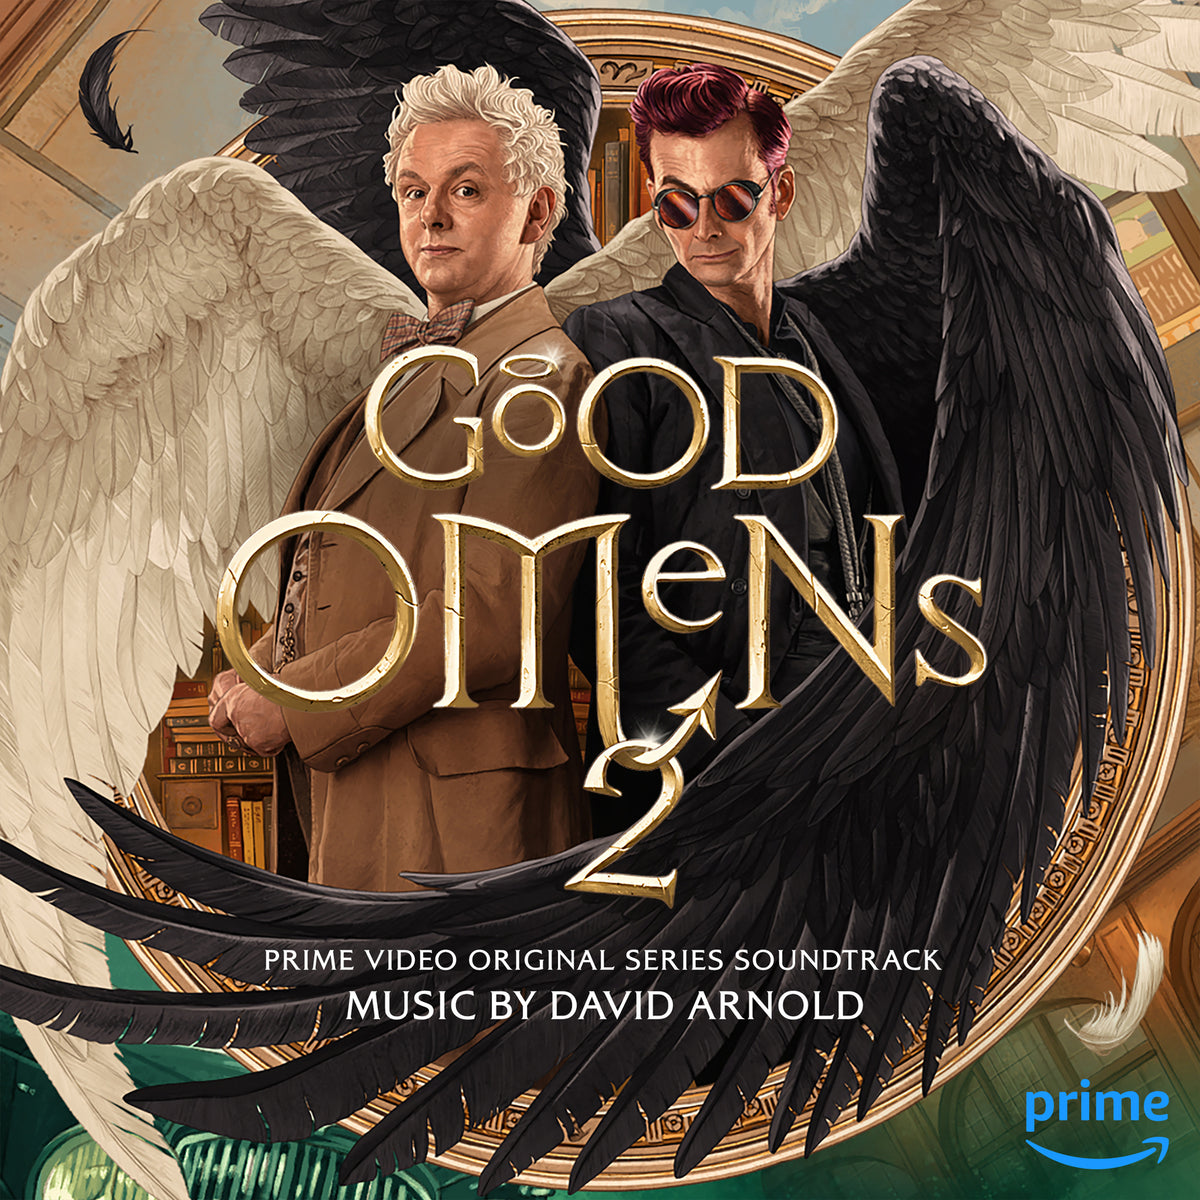 David Arnold - Good Omens 2 - Prime Video Original Series Soundtrack